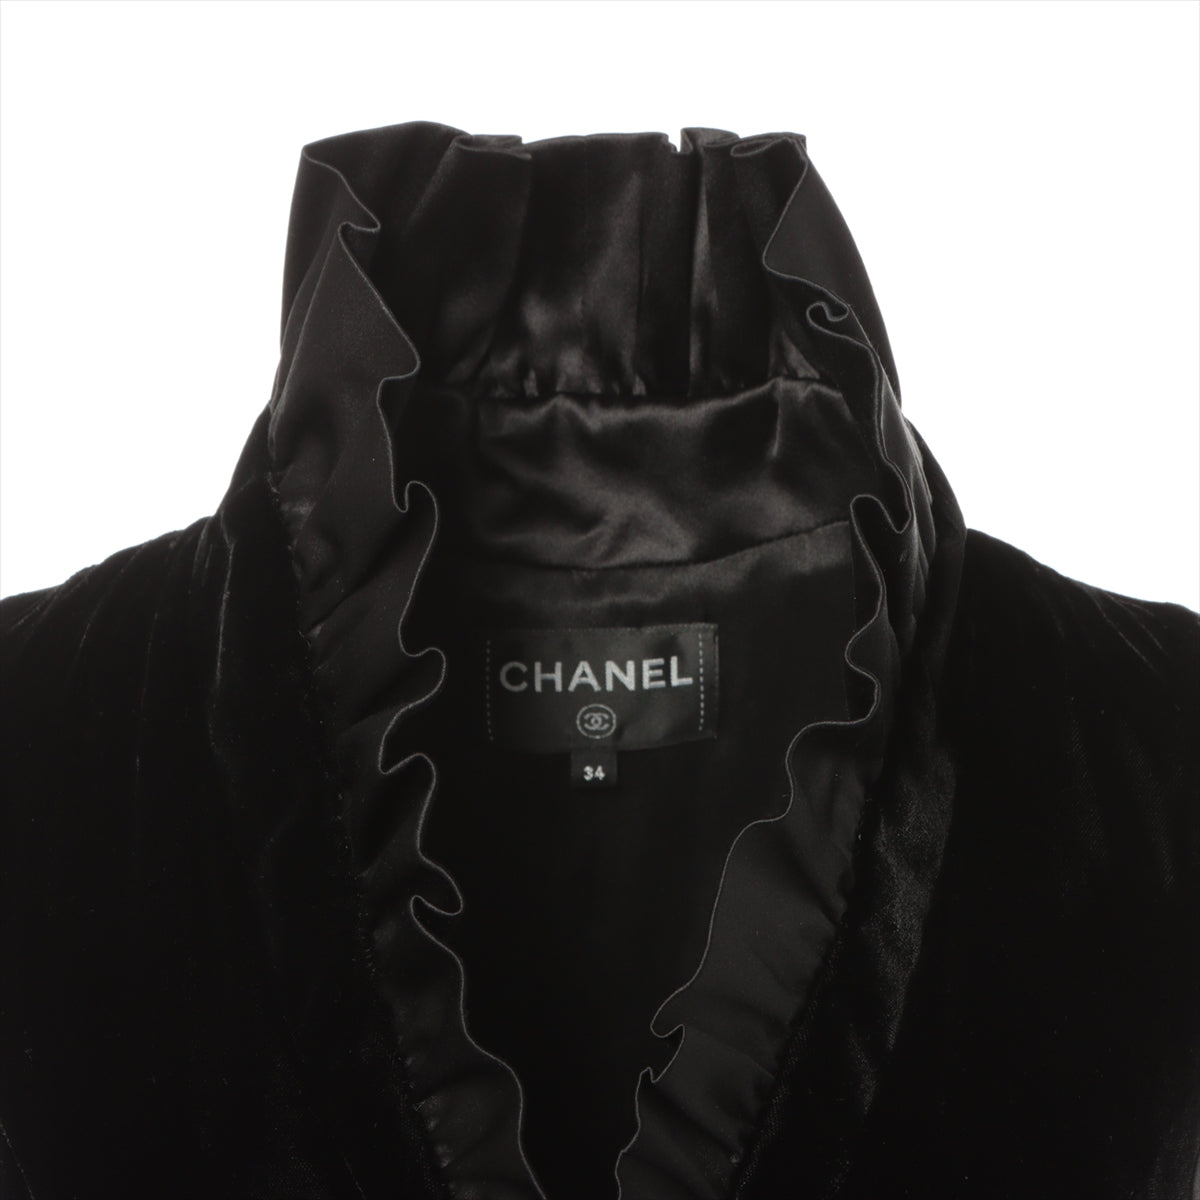 Chanel Coco Button 22 years Rayon × Silk Dress 34 Ladies' Black  velvet minidress P71830V61217